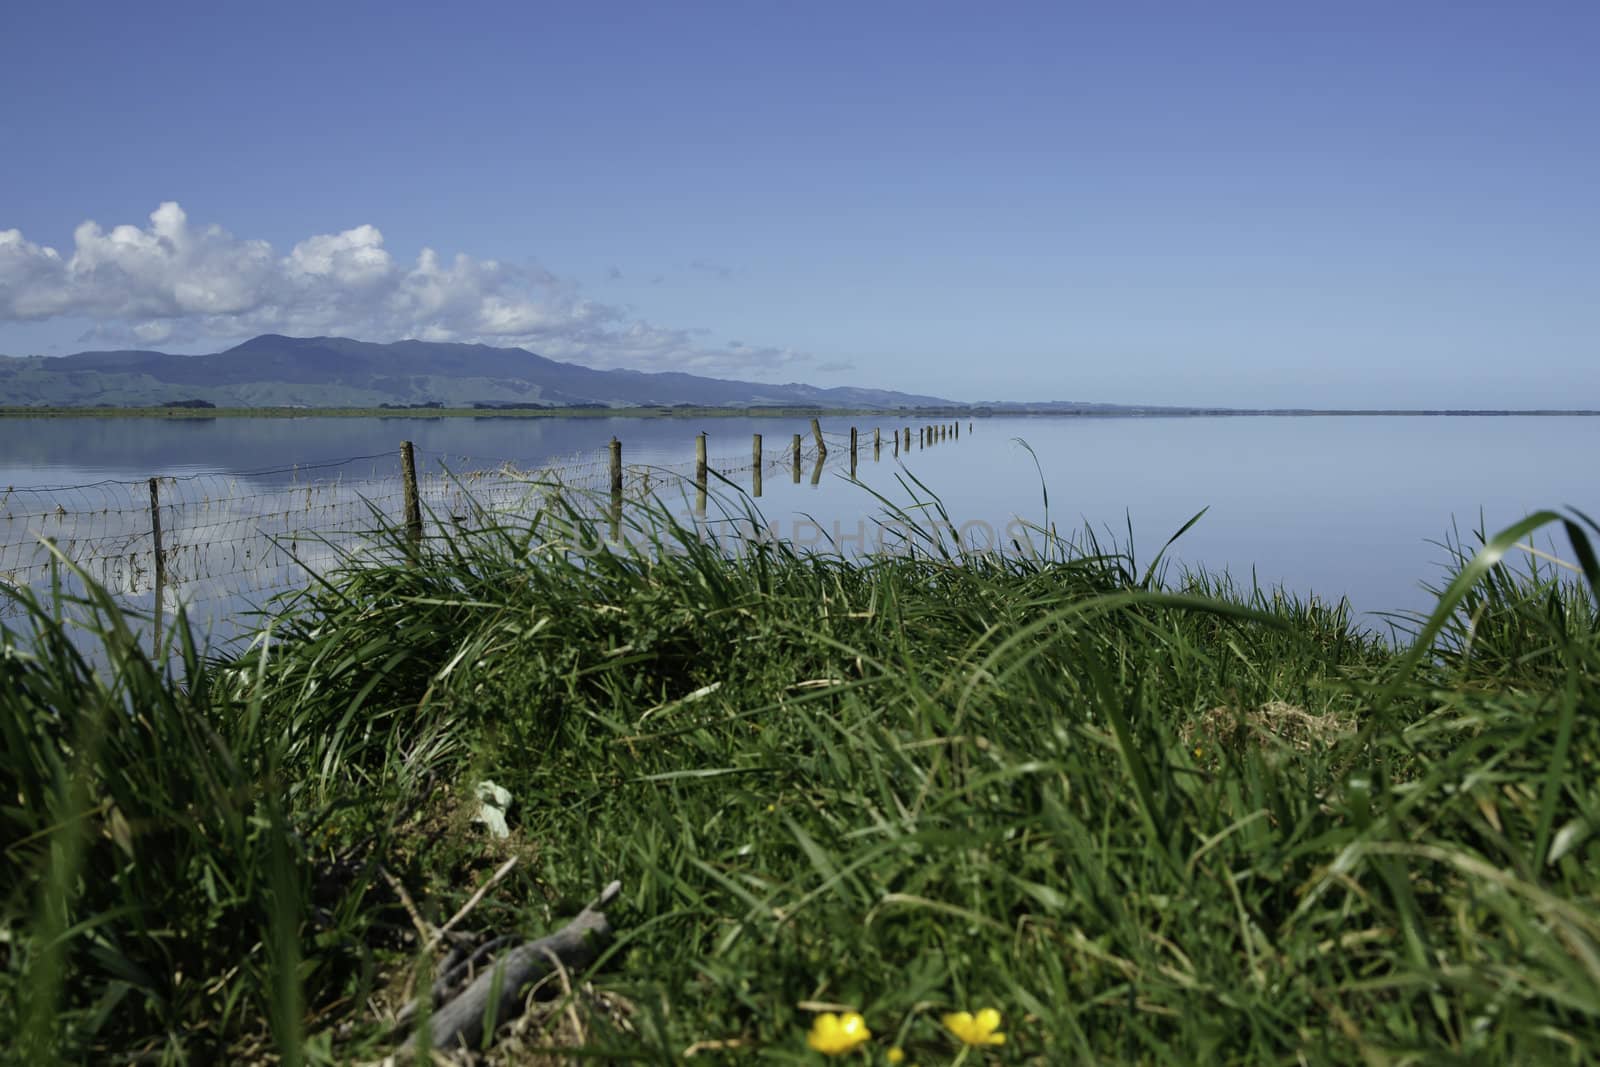 Rural grassy edge and fence projecting into lake Wairarapa, New Zealand.